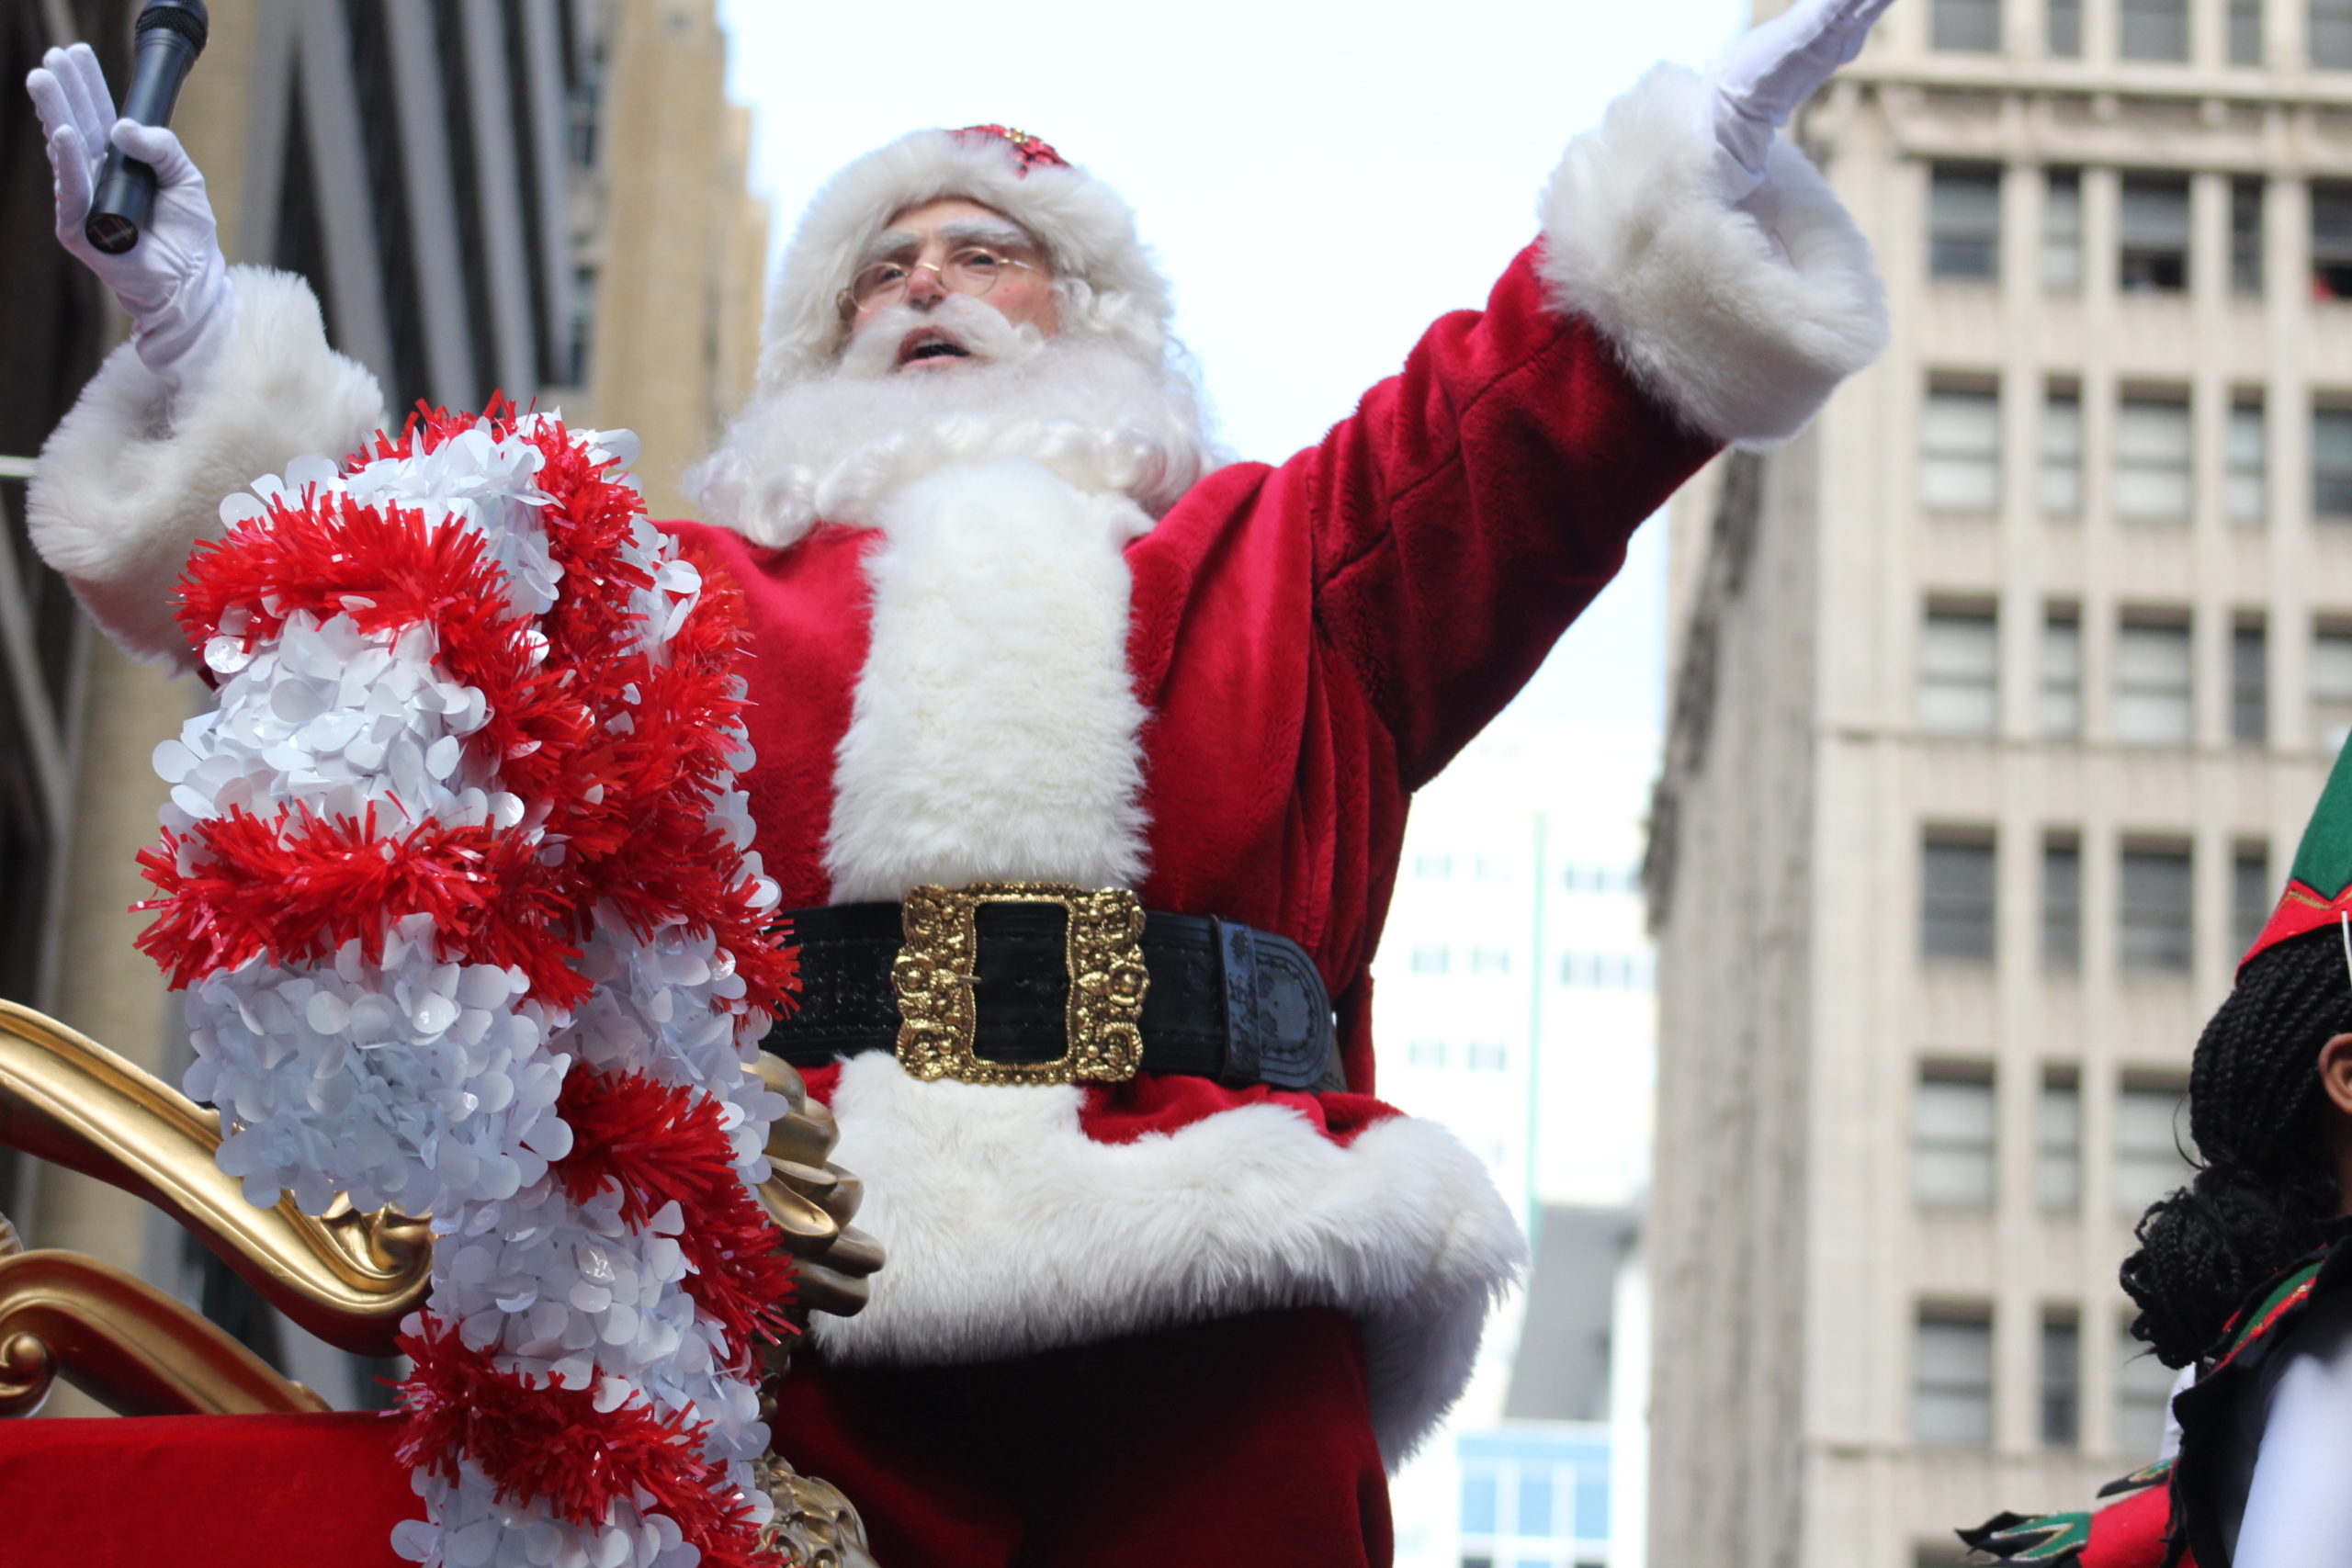 Philadelphia Santa Claus for hire